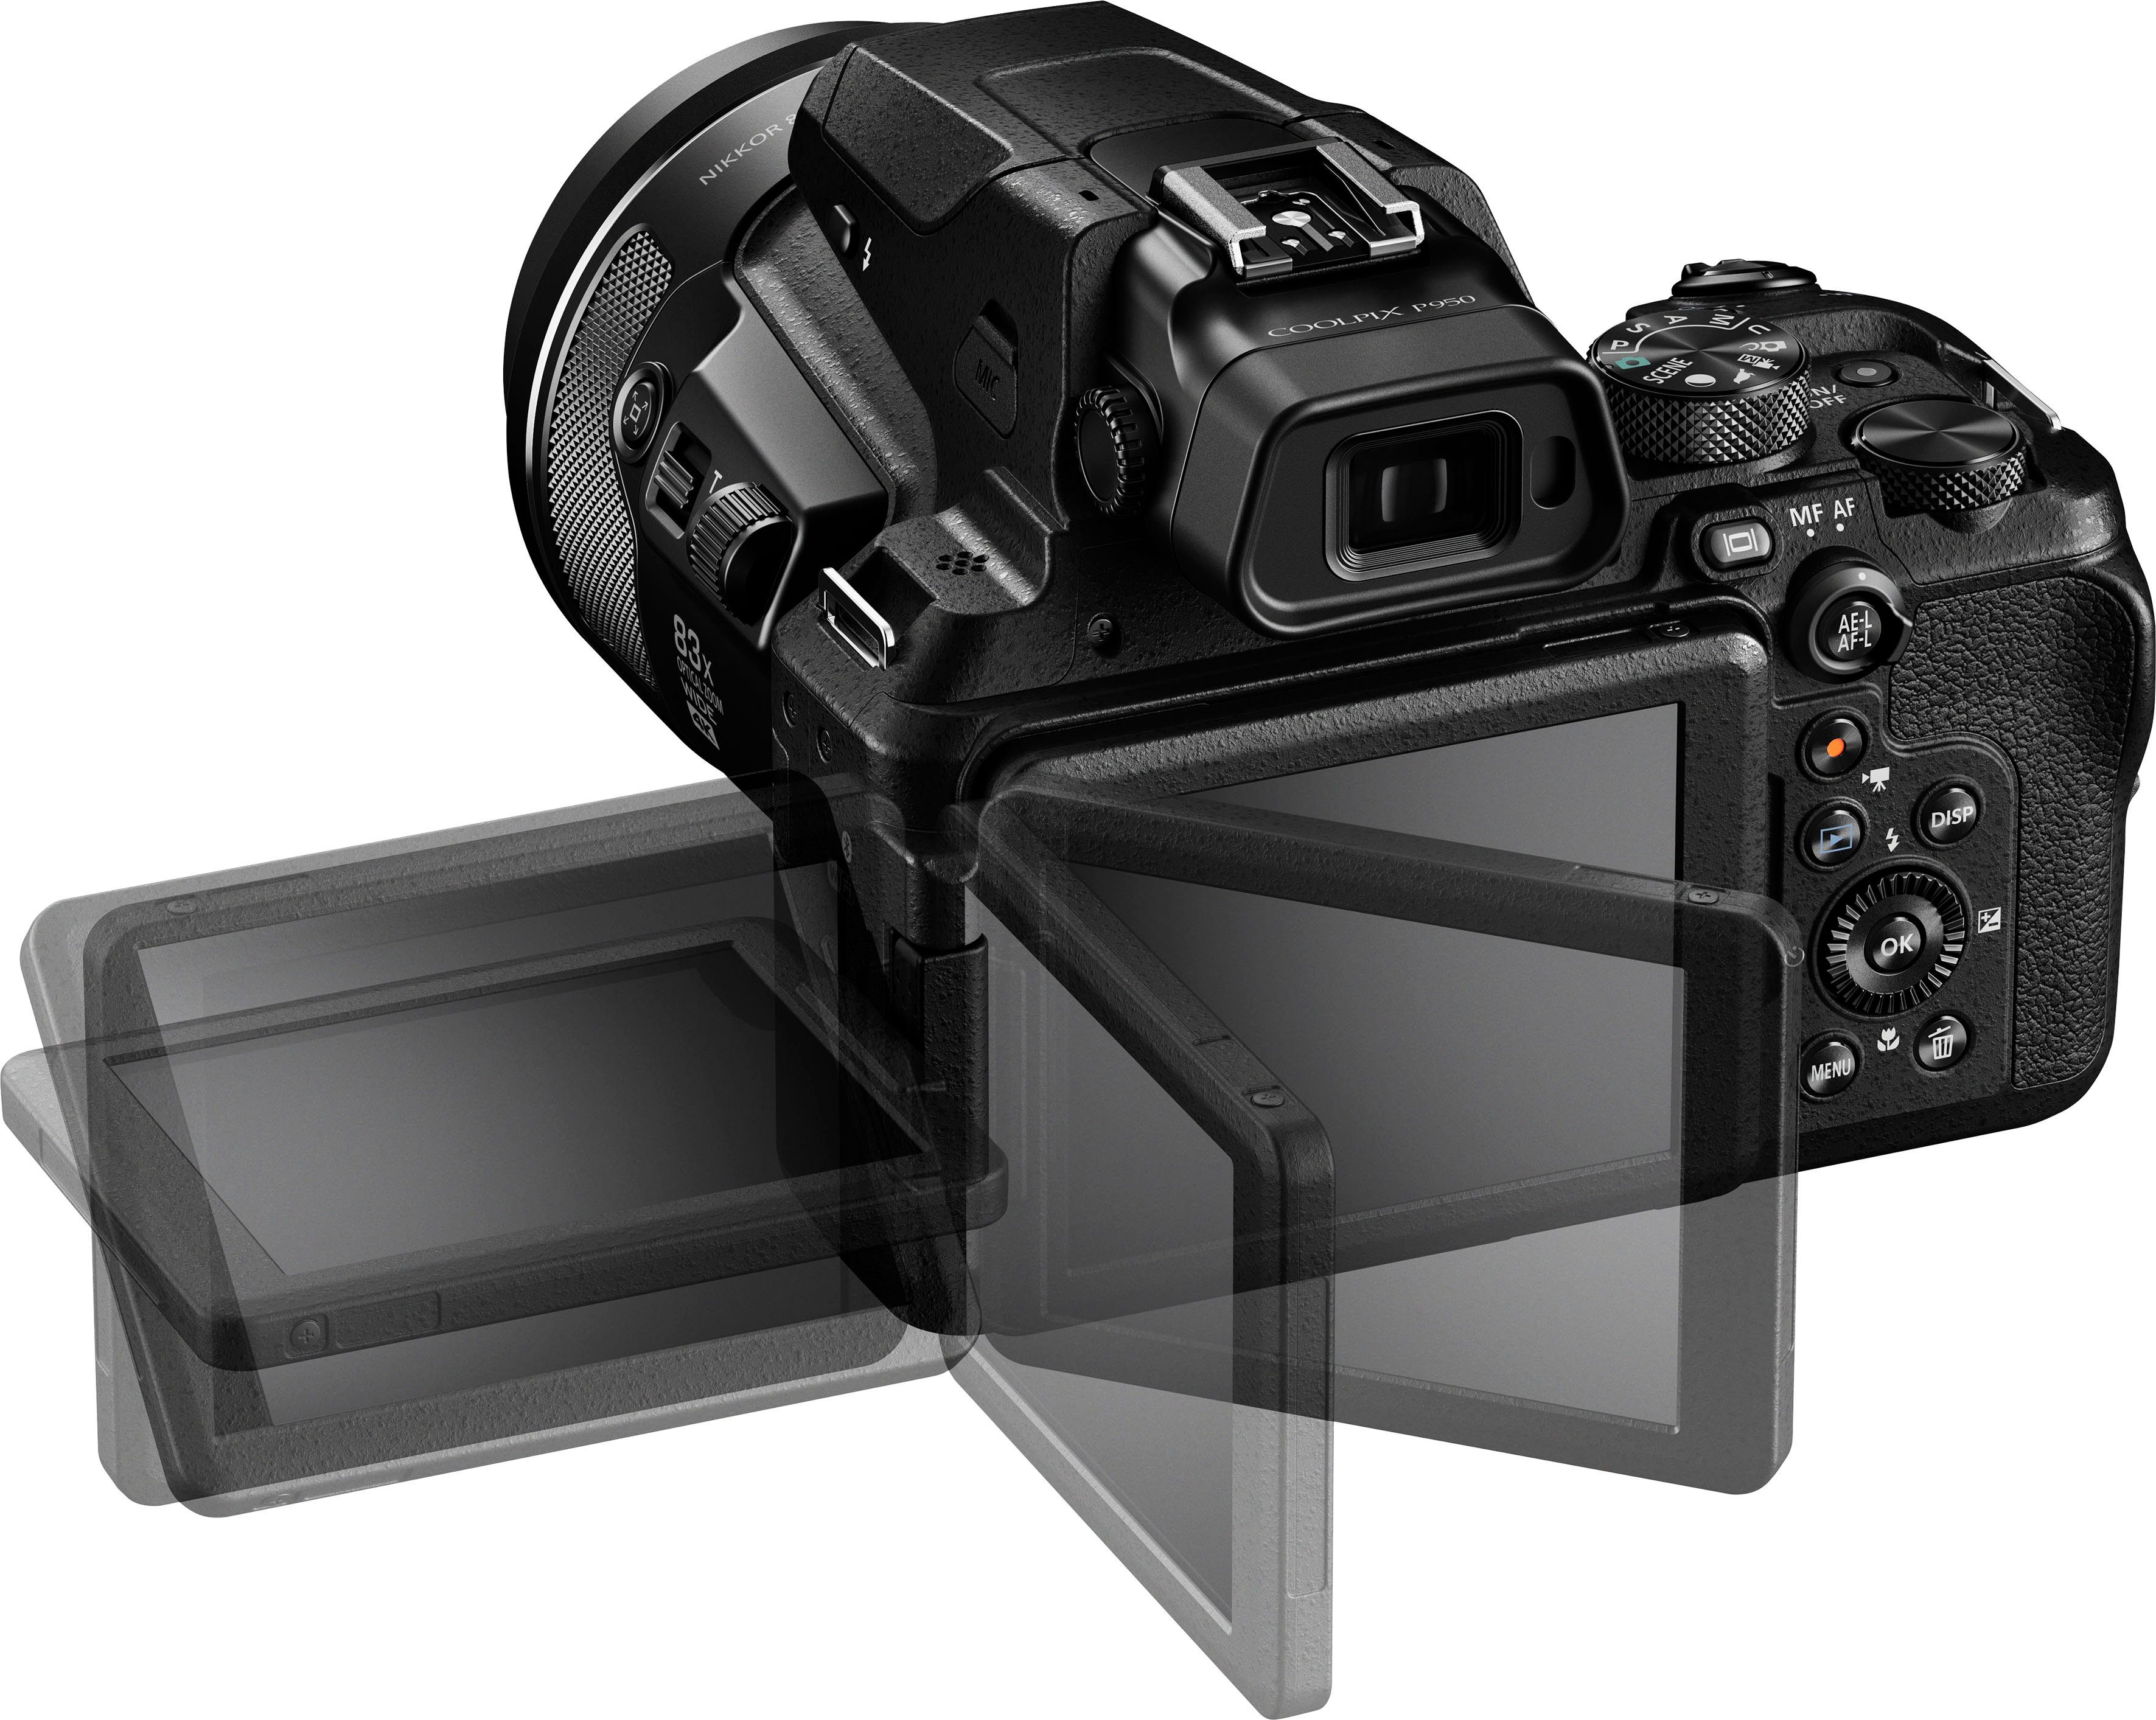 MP, Zoom, Bluetooth, Coolpix 83x opt. (16 Nikon P950 Bridge-Kamera (WiFi) WLAN